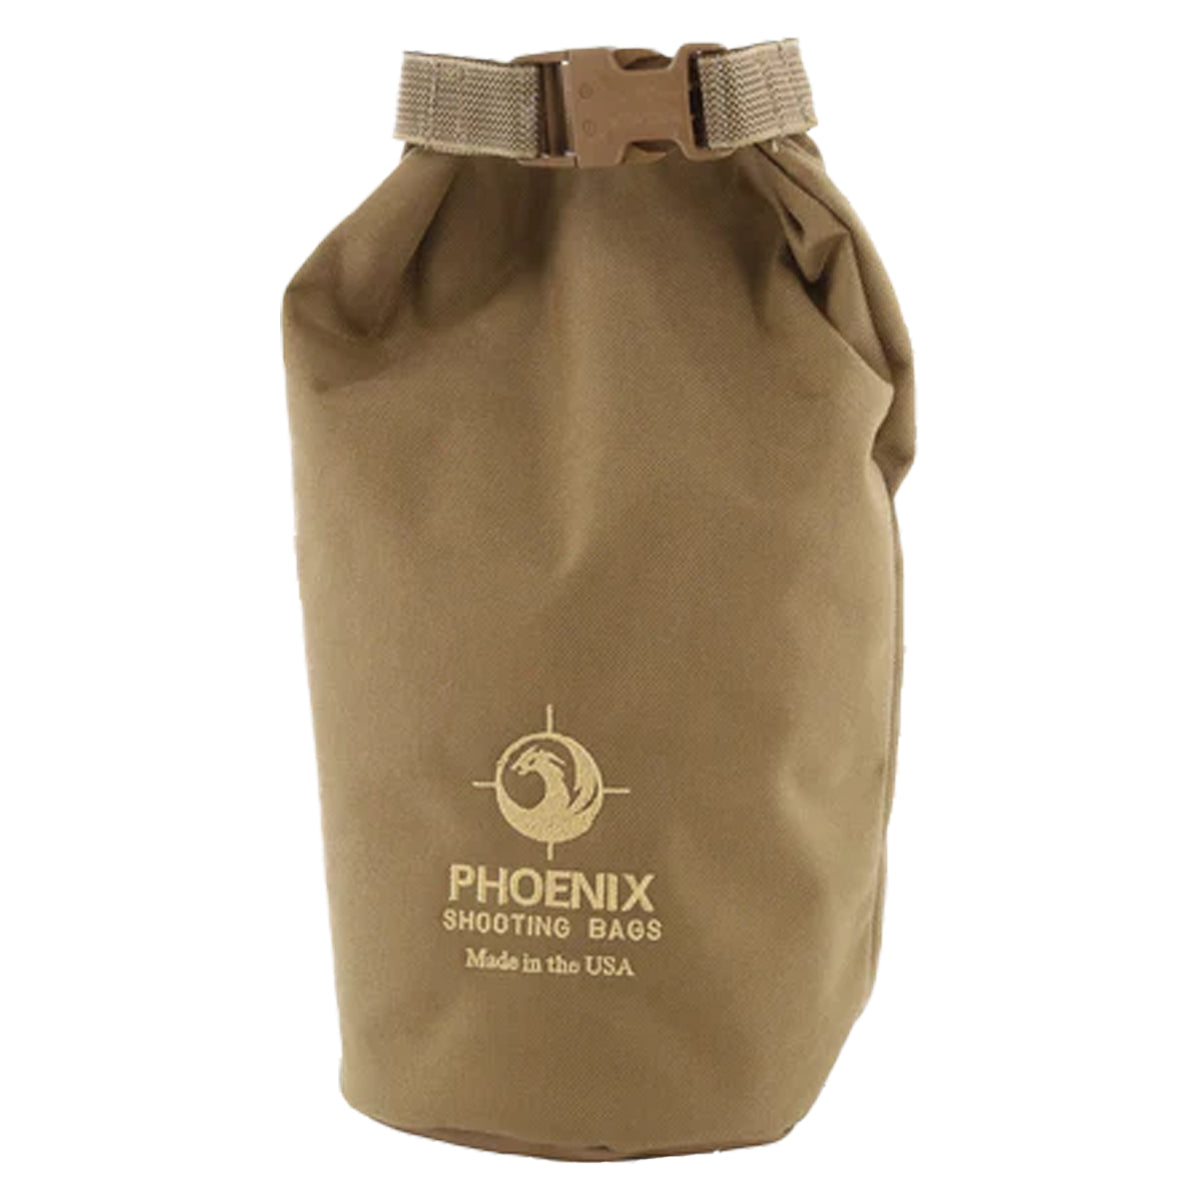 Phoenix Shooting Bags TBD (Tony Bag of Doughnuts) in Coyote by GOHUNT | Phoenix Shooting Bags - GOHUNT Shop